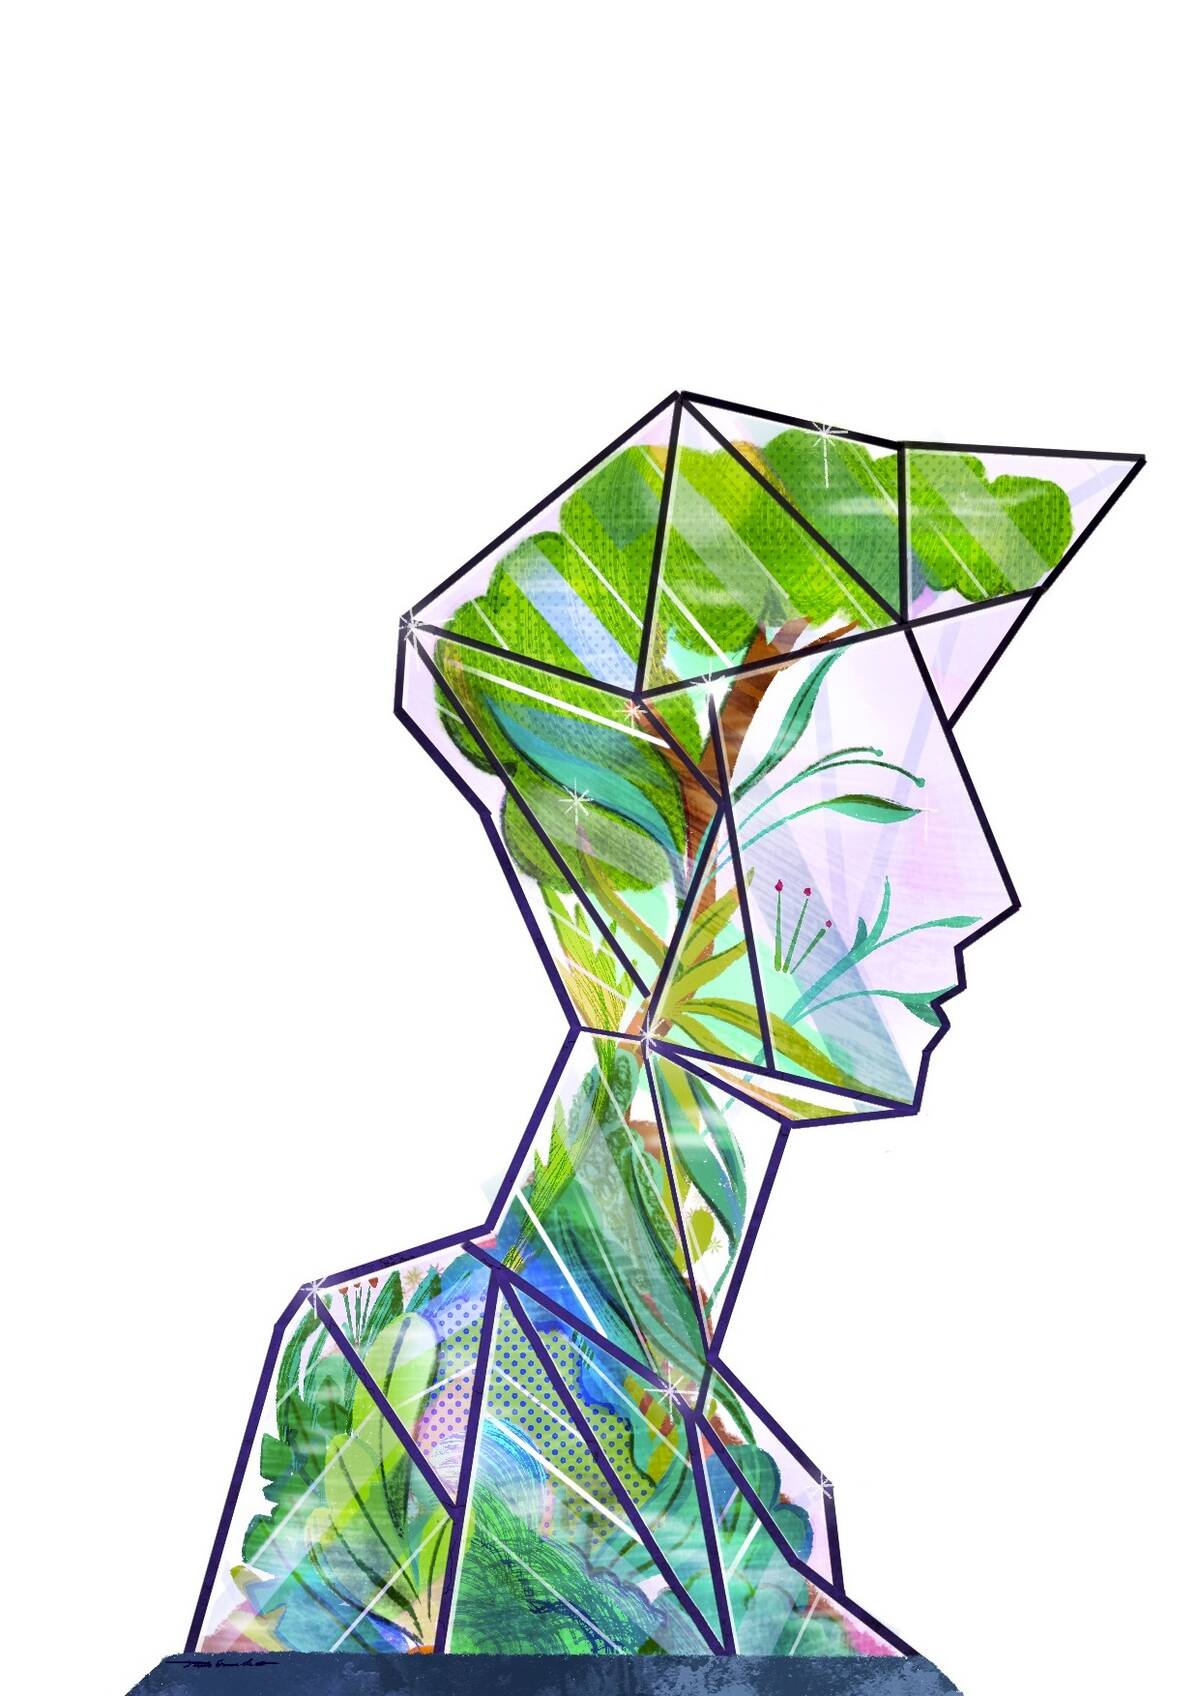 bust of person as glass terrarium